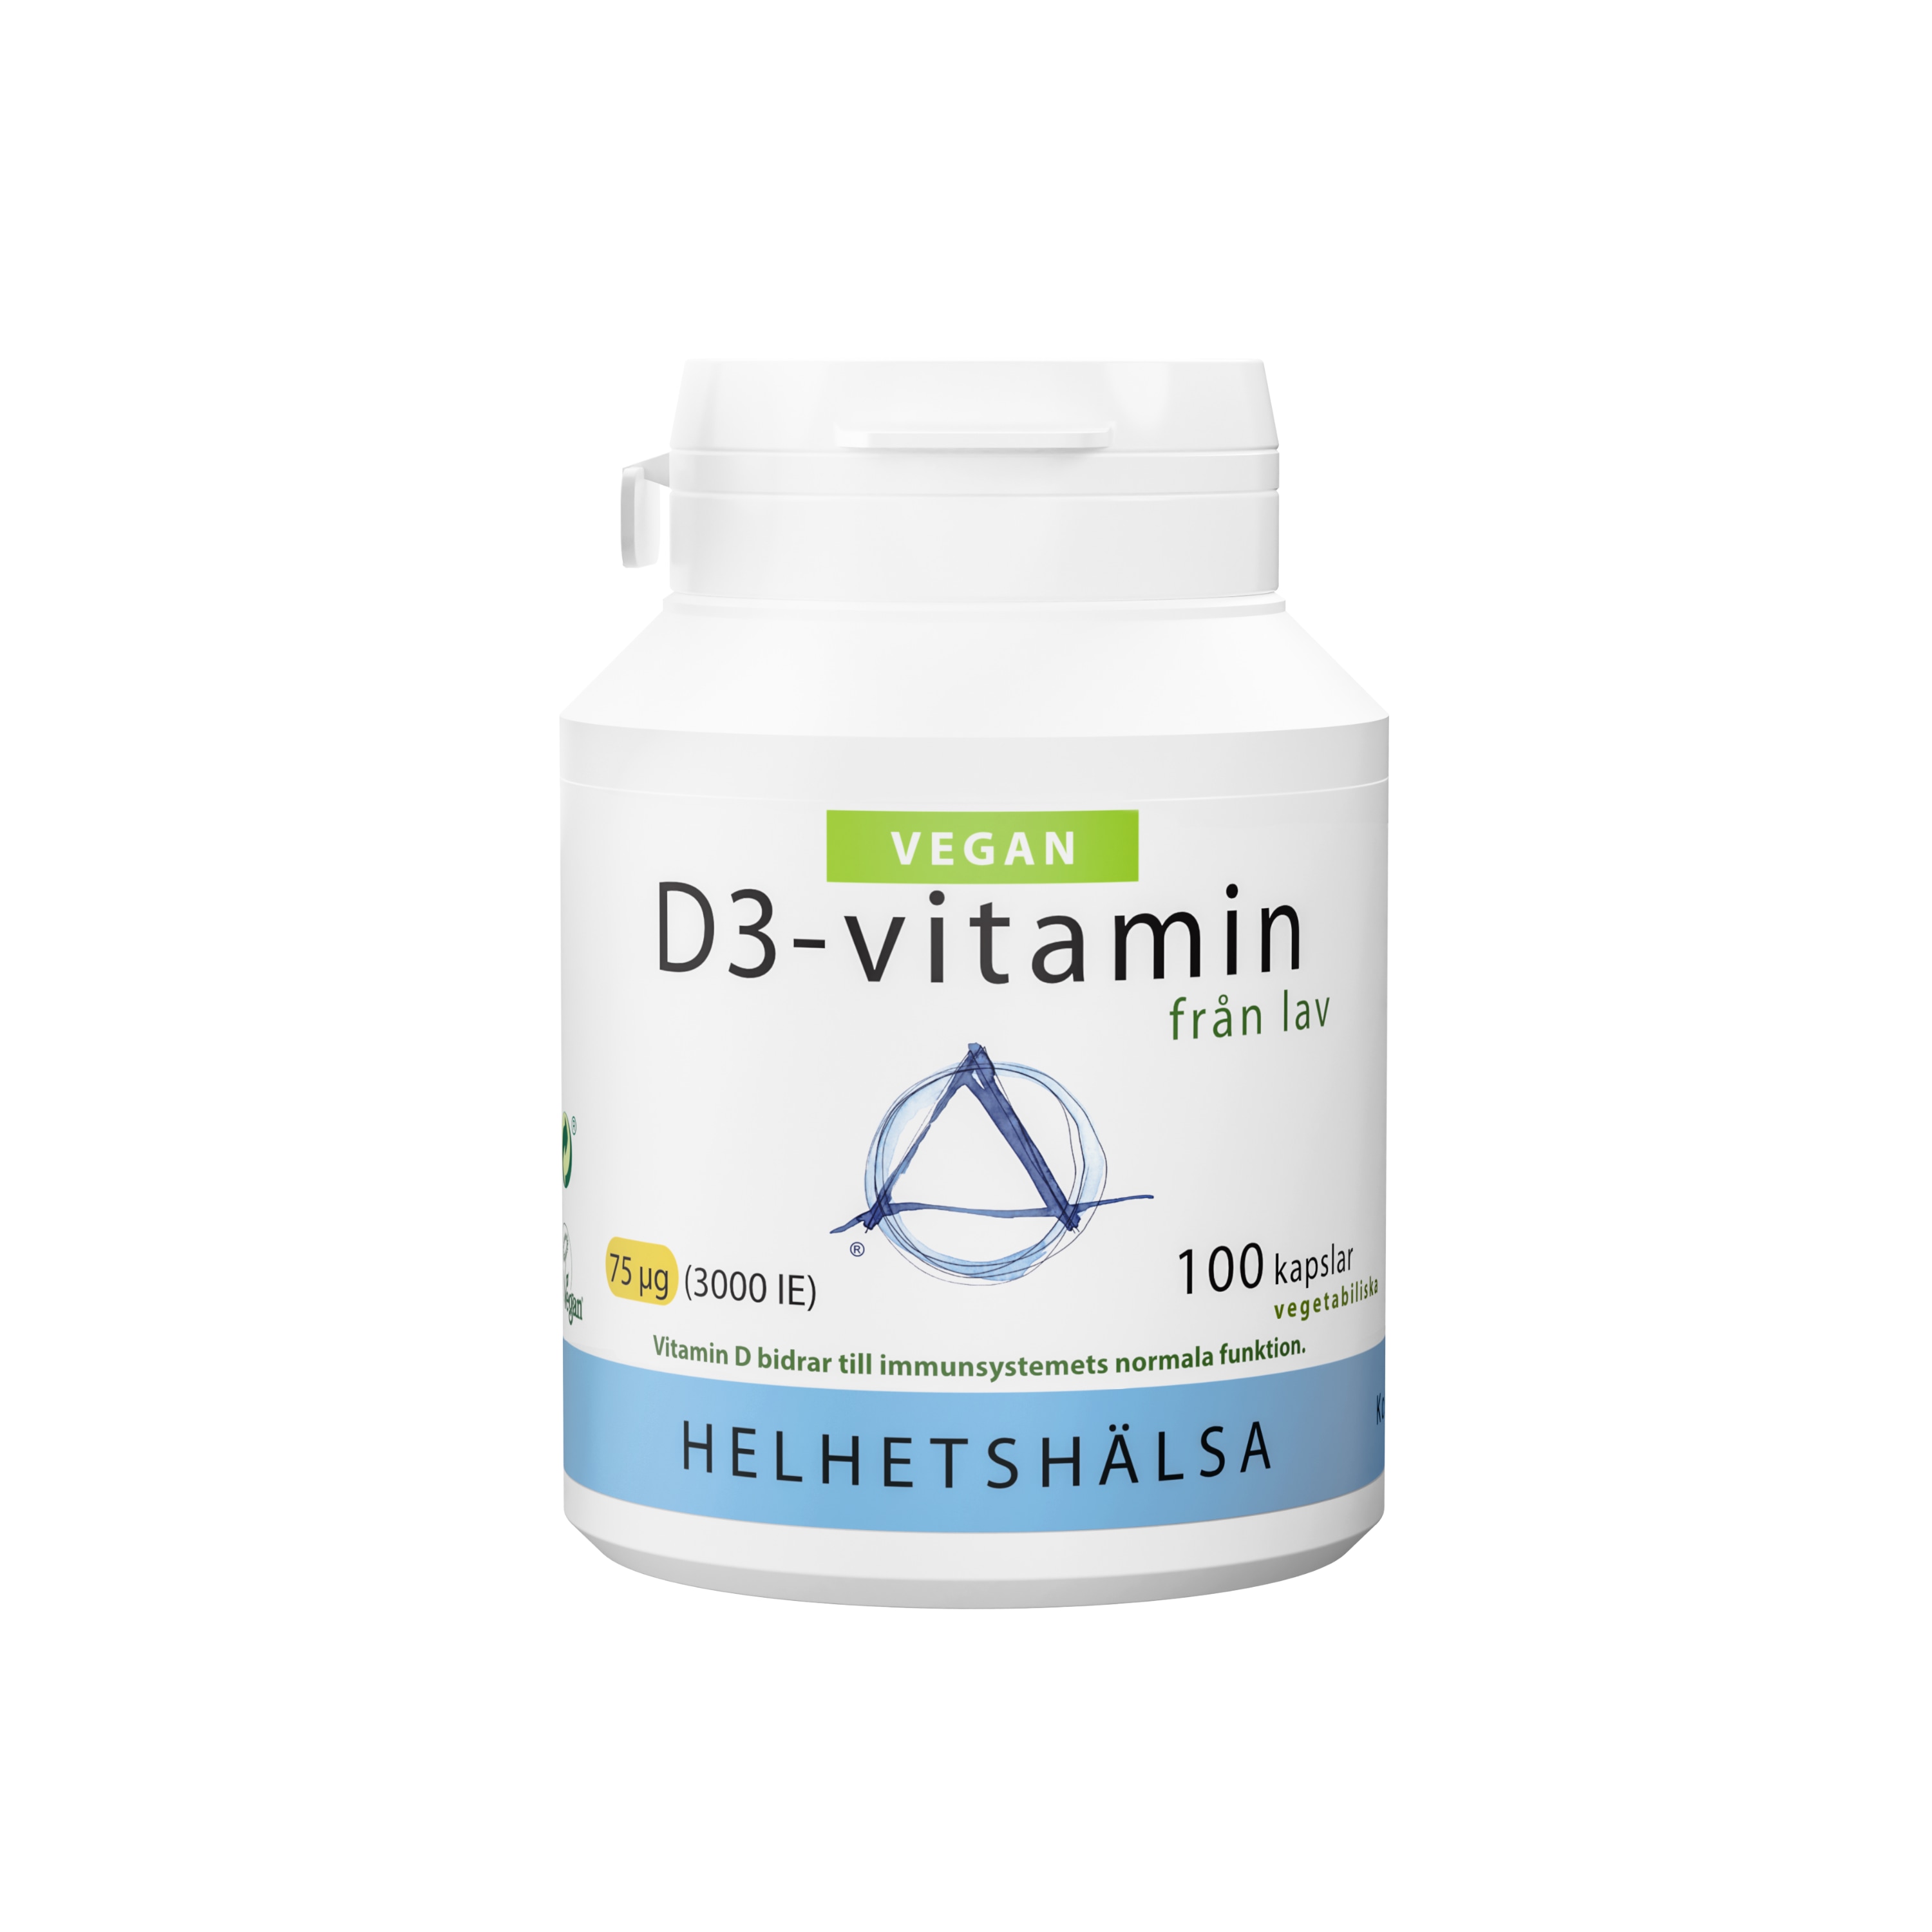 D3 vitamin vegan 75mcg 100k